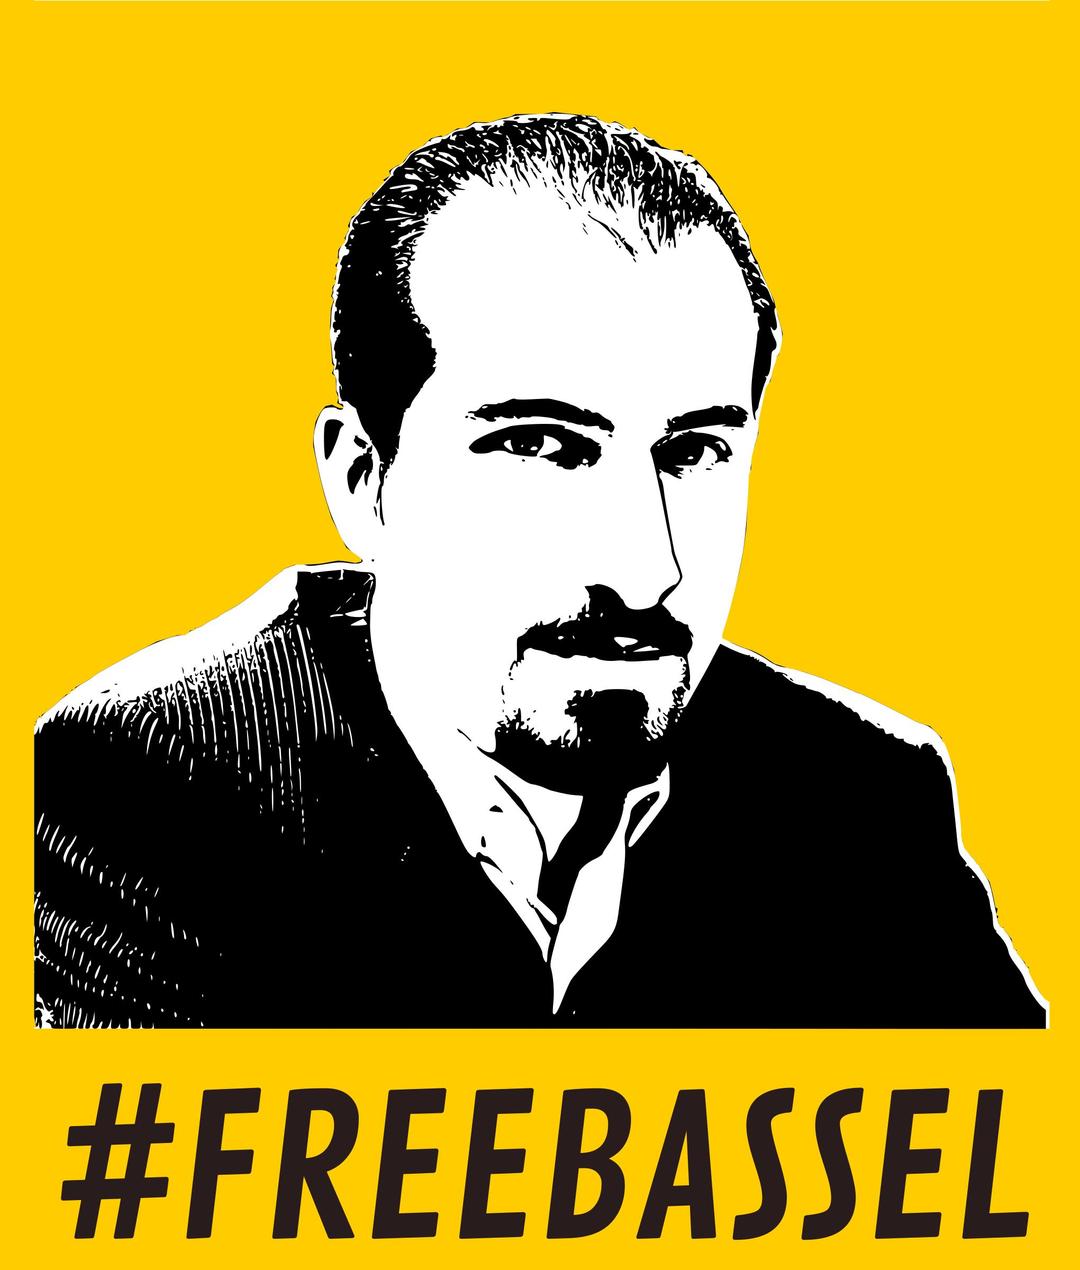 Freebassel yellow poster png transparent